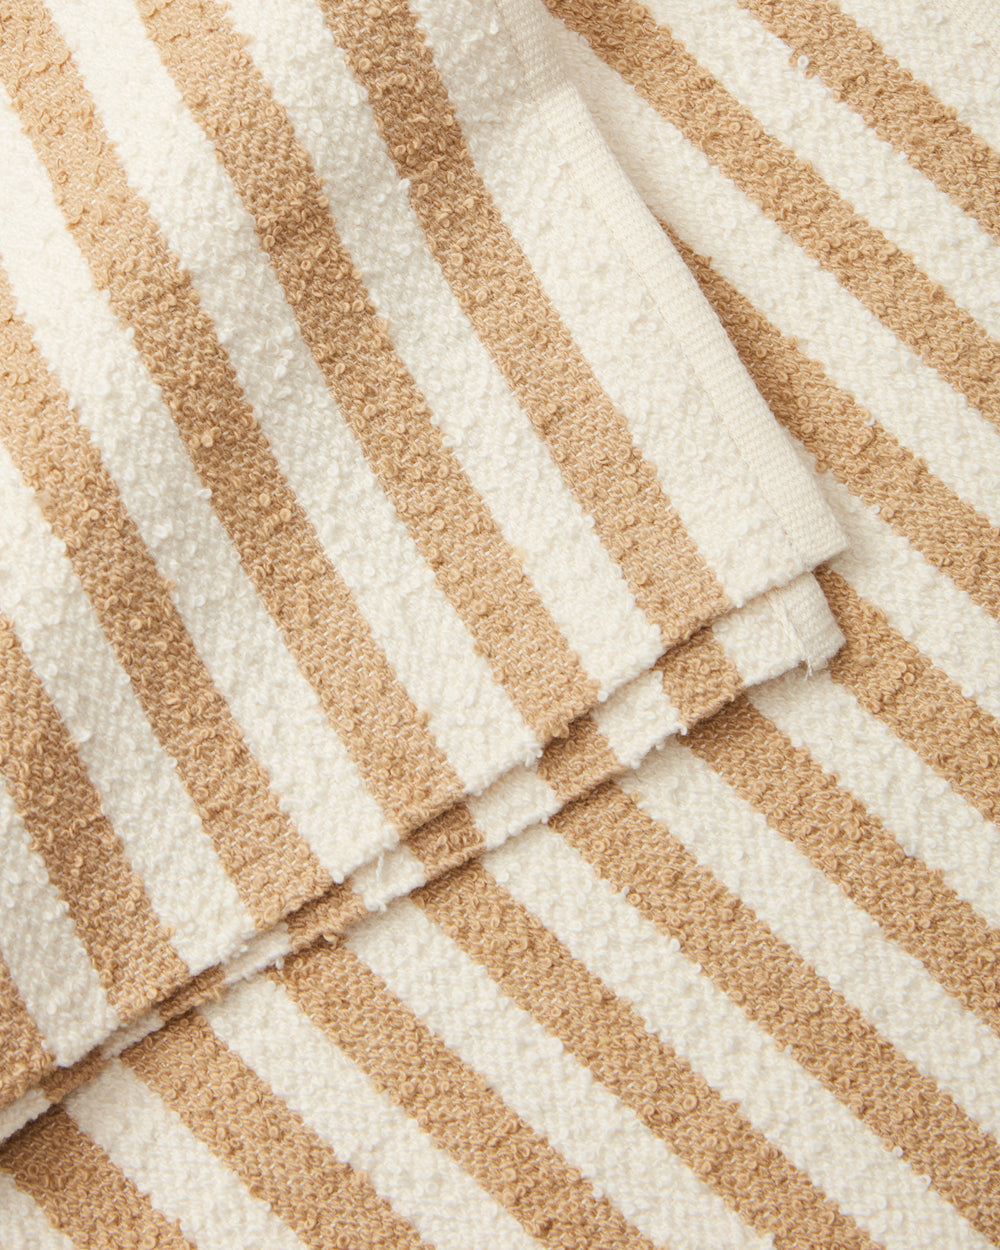 Everyday Hand Towel - Fawn Stripe